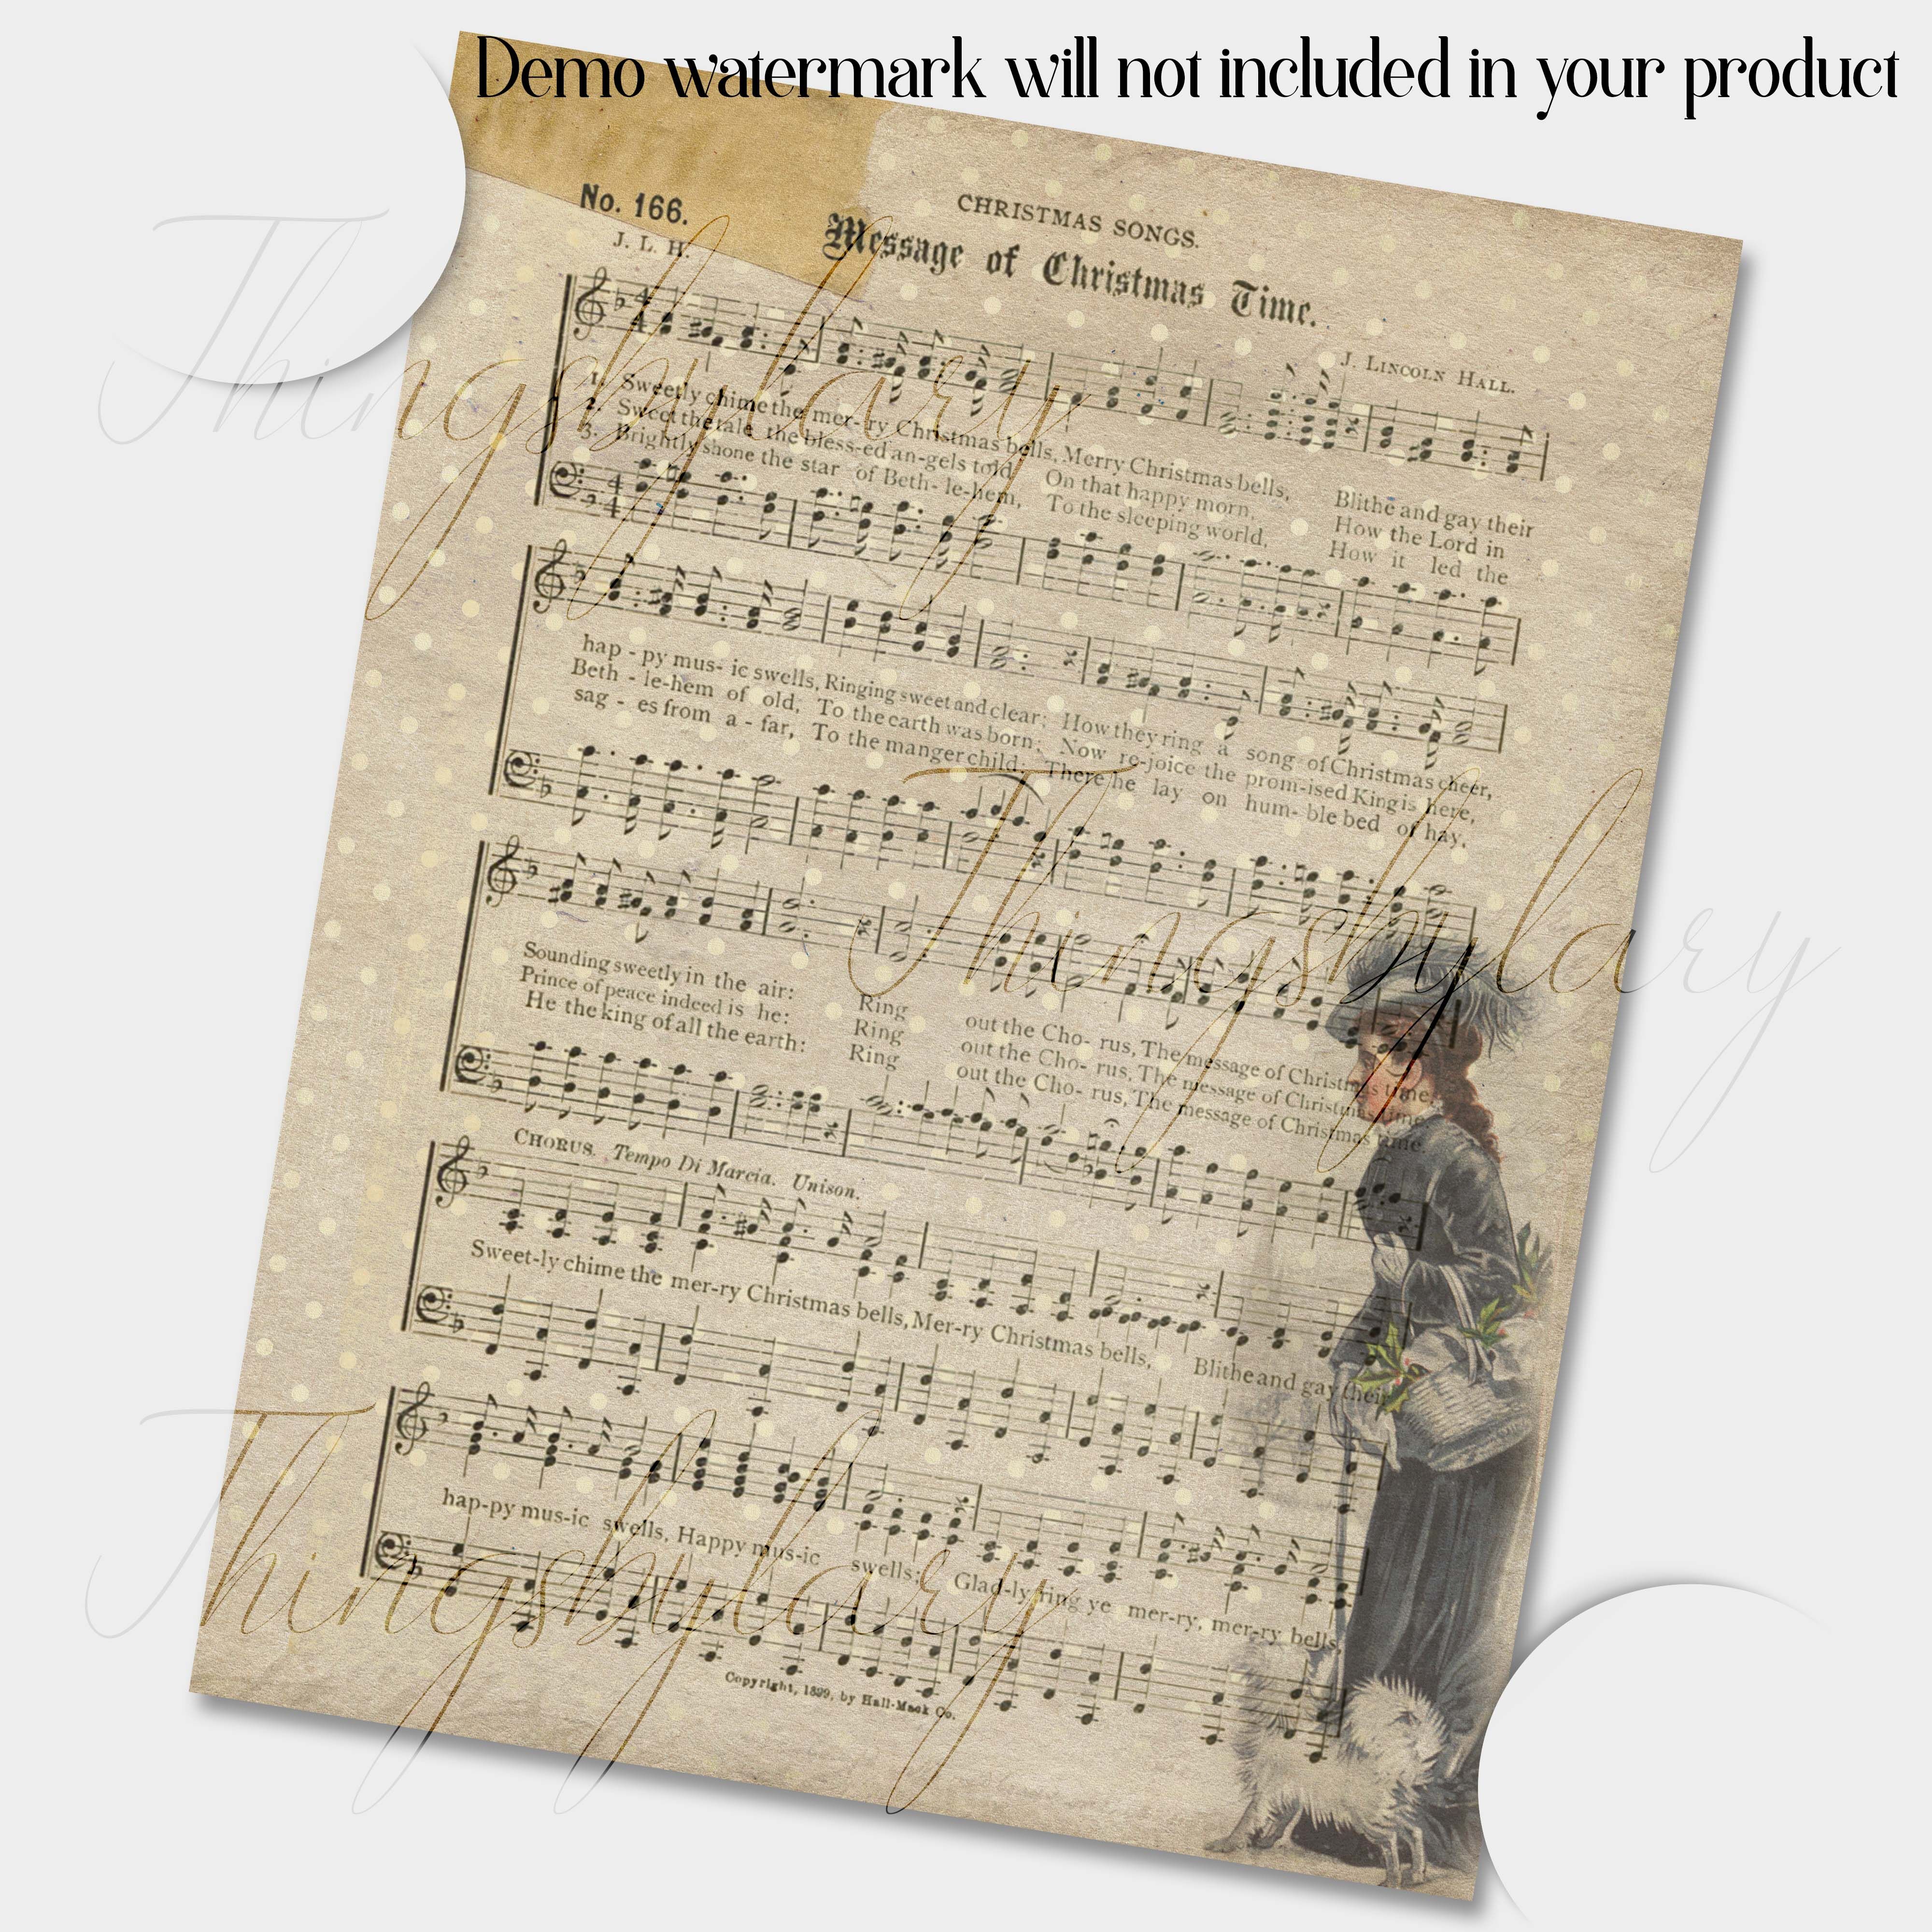 Digital Vintage Christmas Sheet Music 8.5x11 Digital Paper